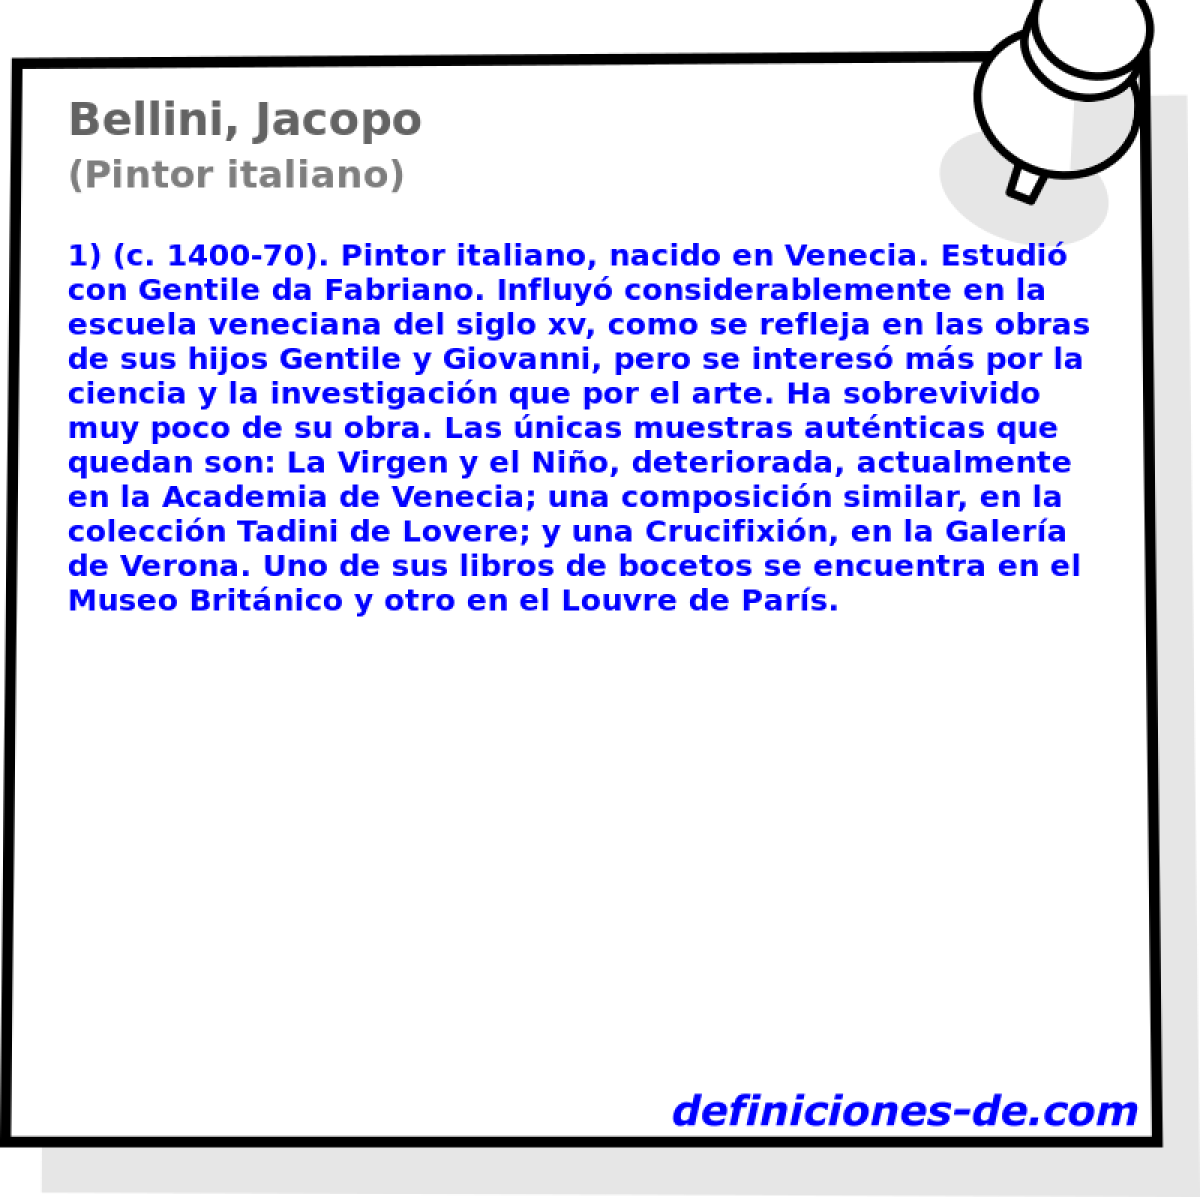 Bellini, Jacopo (Pintor italiano)